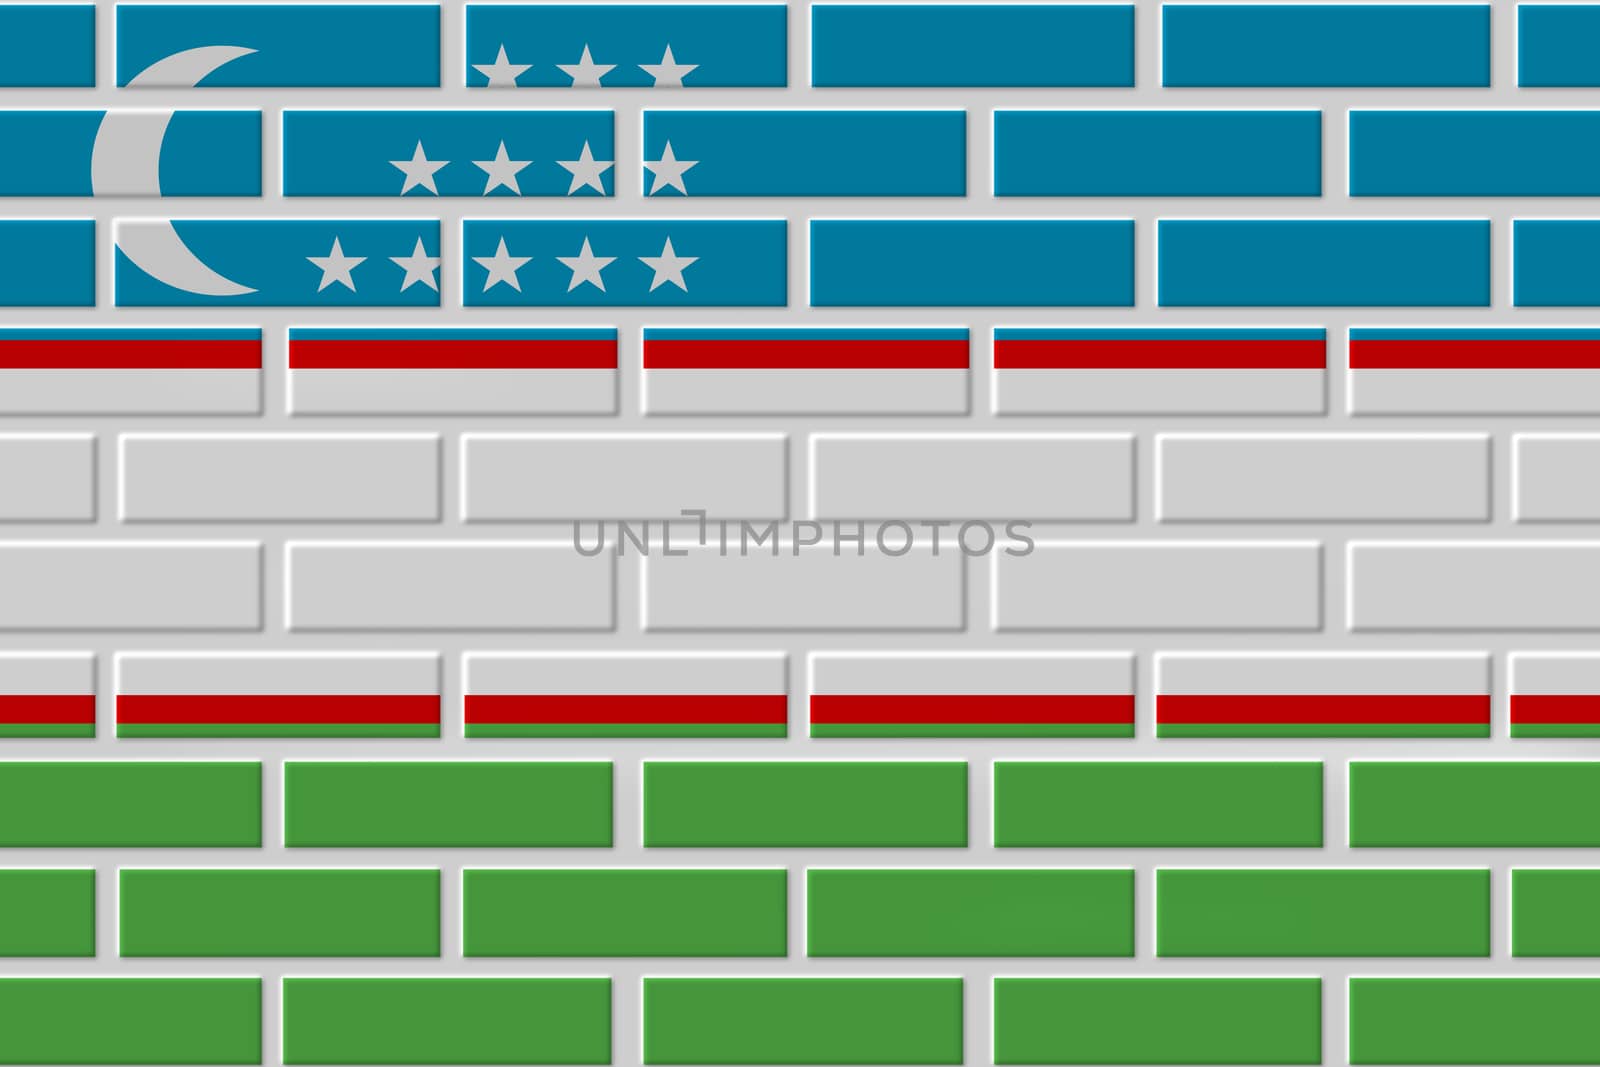 Uzbekistan painted flag. Patriotic brick flag illustration background. National flag of Uzbekistan